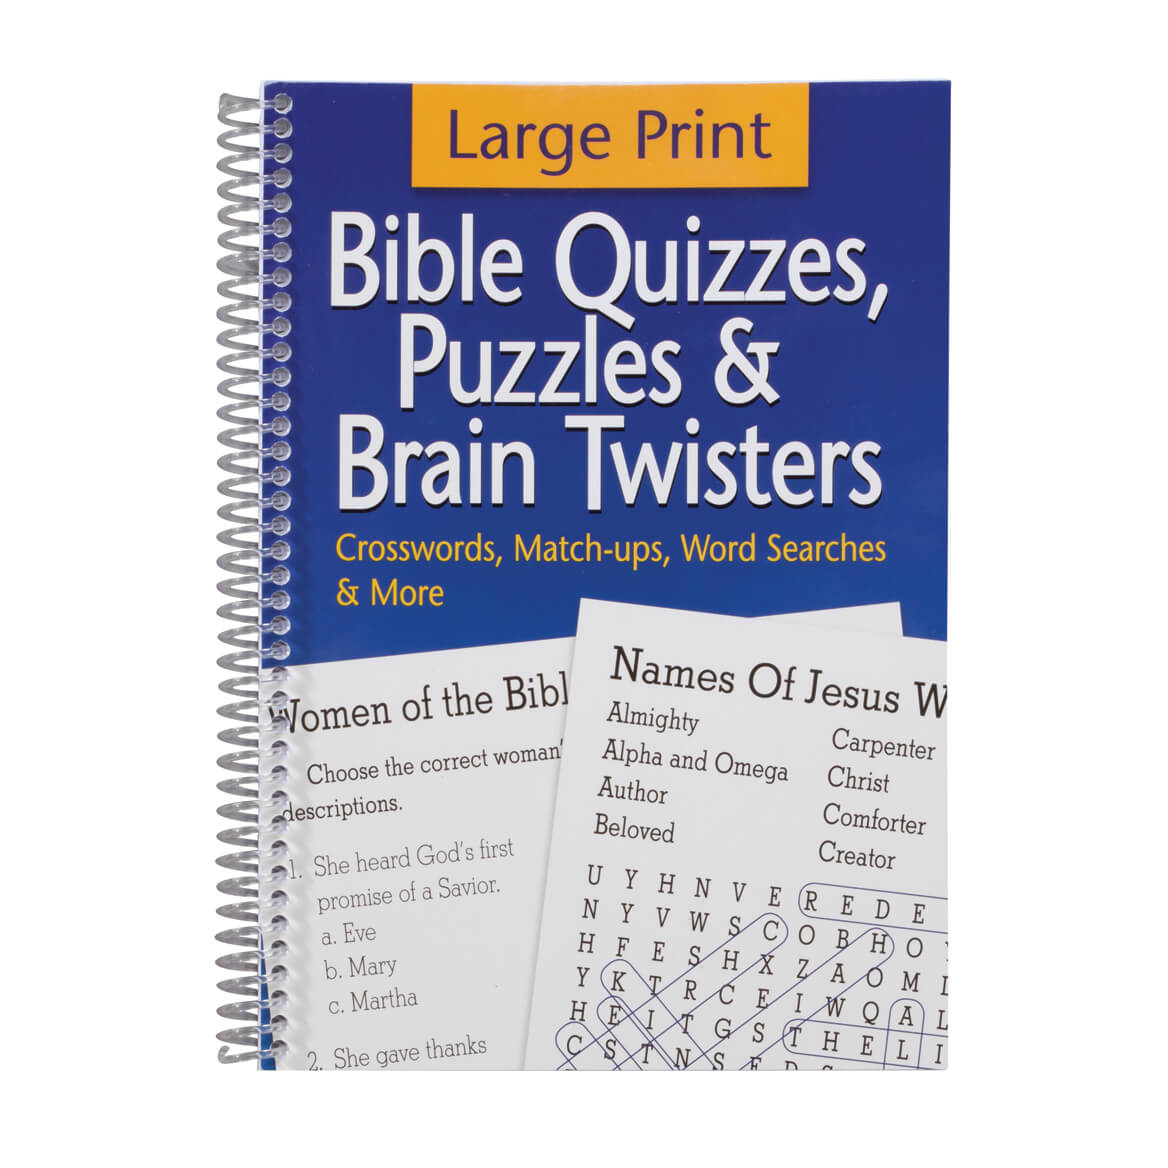 Large Print Bible Puzzle Book - Bible Puzzles - Walter Drake - Puzzle Print Reviews